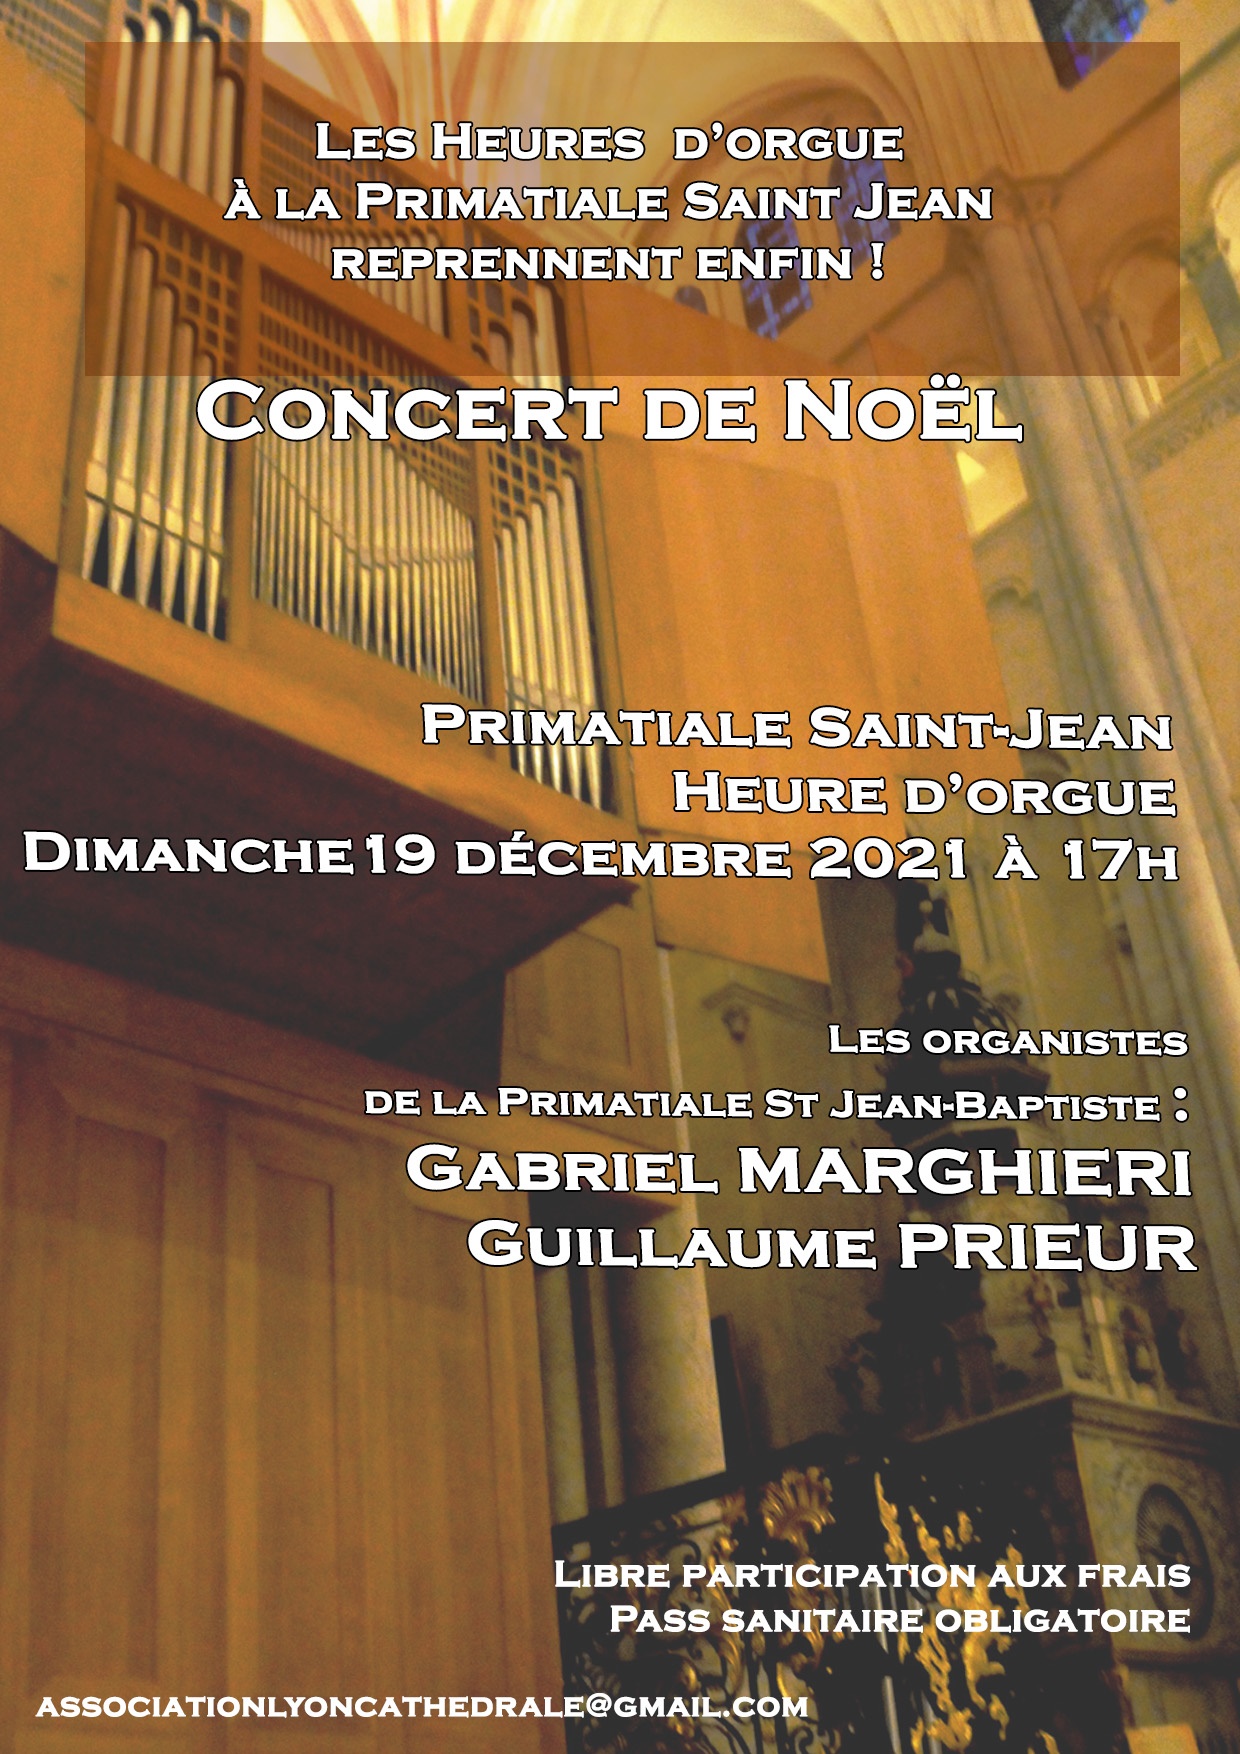 Concert de Noël des organistes de la Primatiale